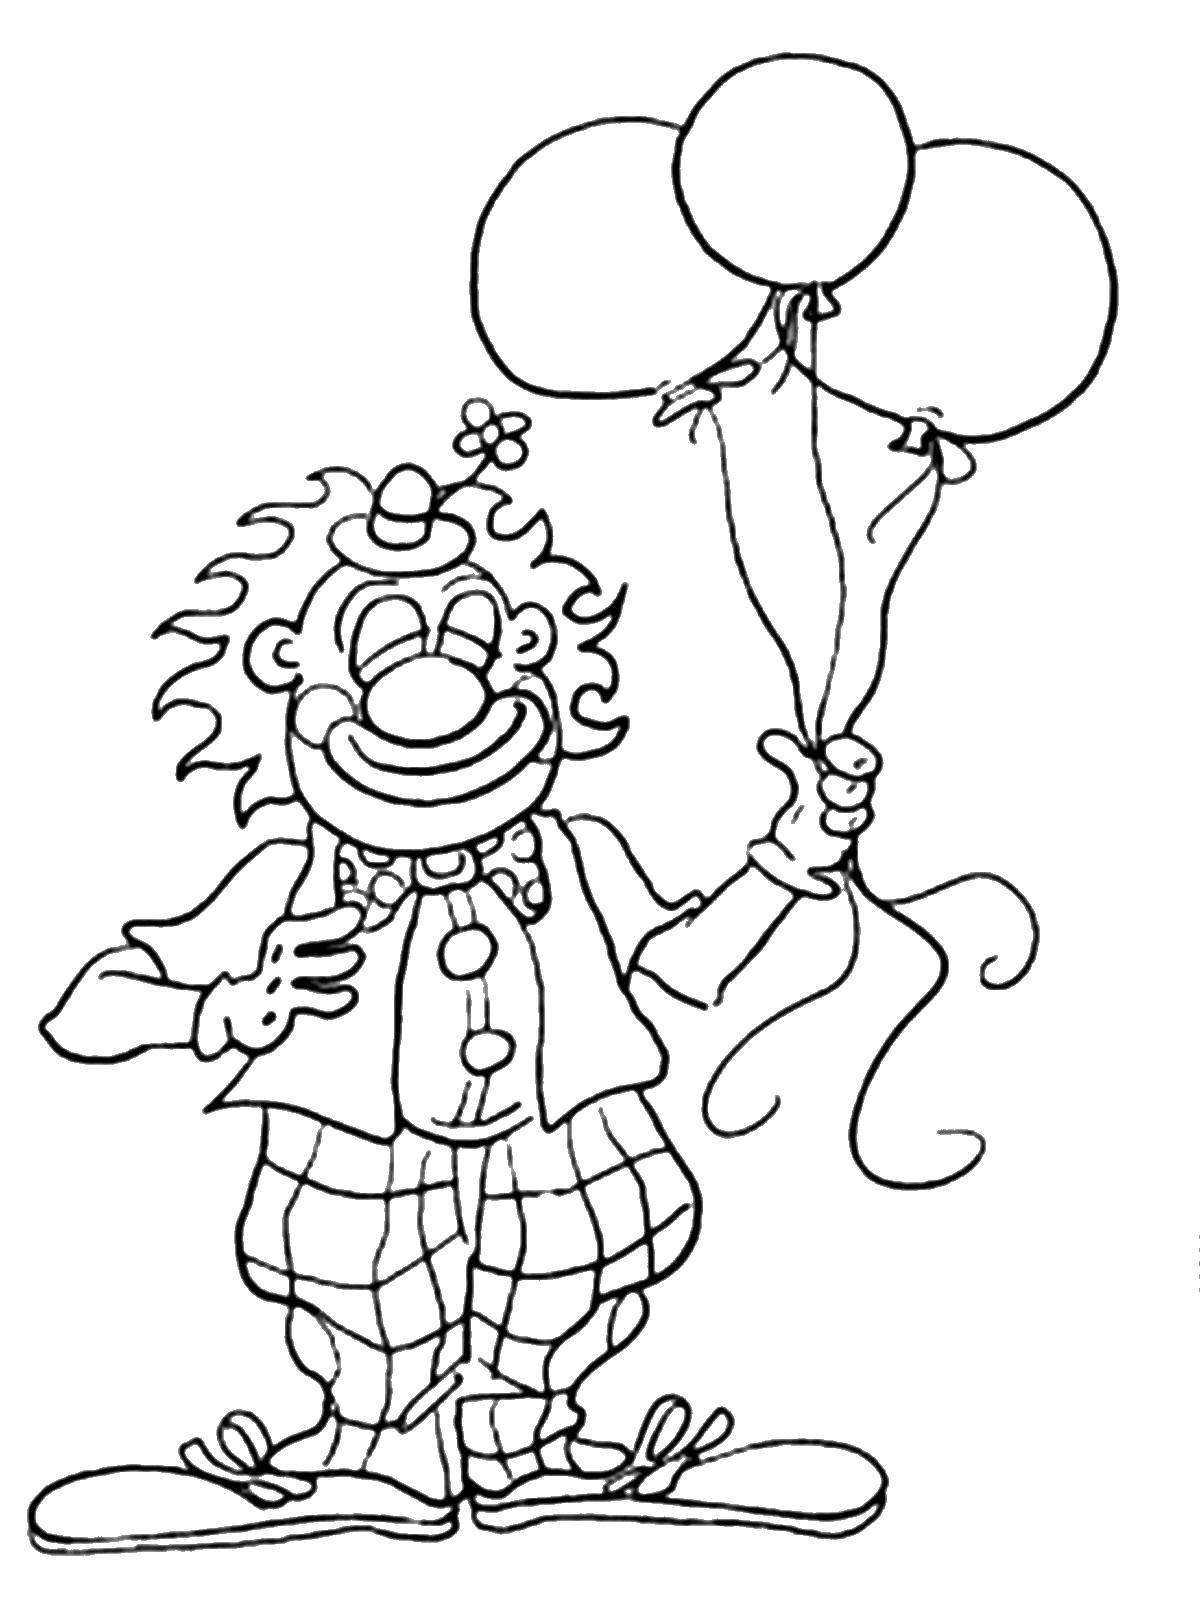 Coloring Balls at the clown. Category clown. Tags:  Clown, circus, joy, fun, balls.